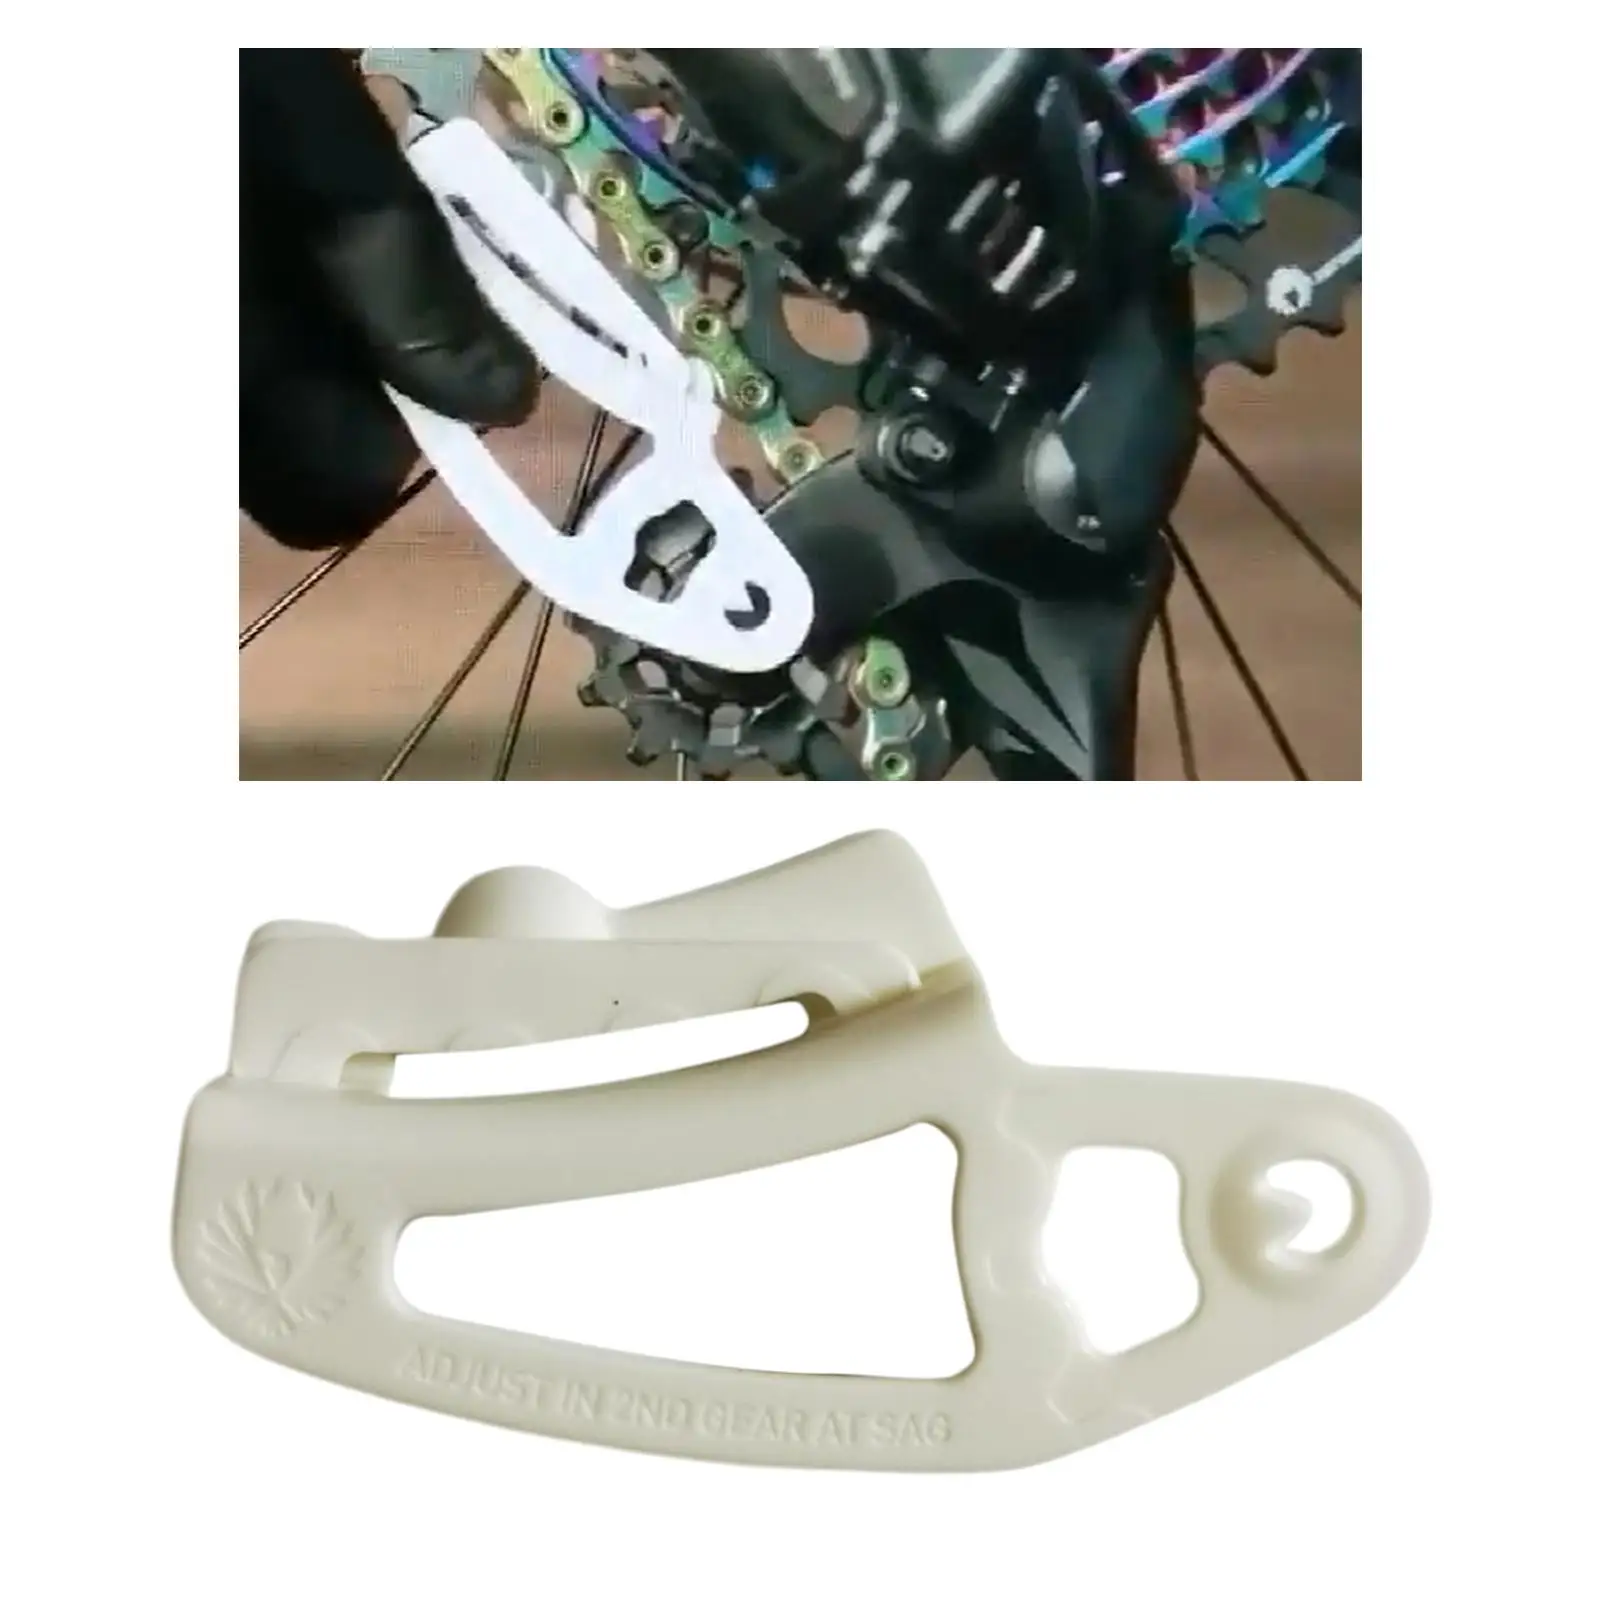 Rear Derailleur Chaingap Adjustment Gauge Bike Chain Tool,